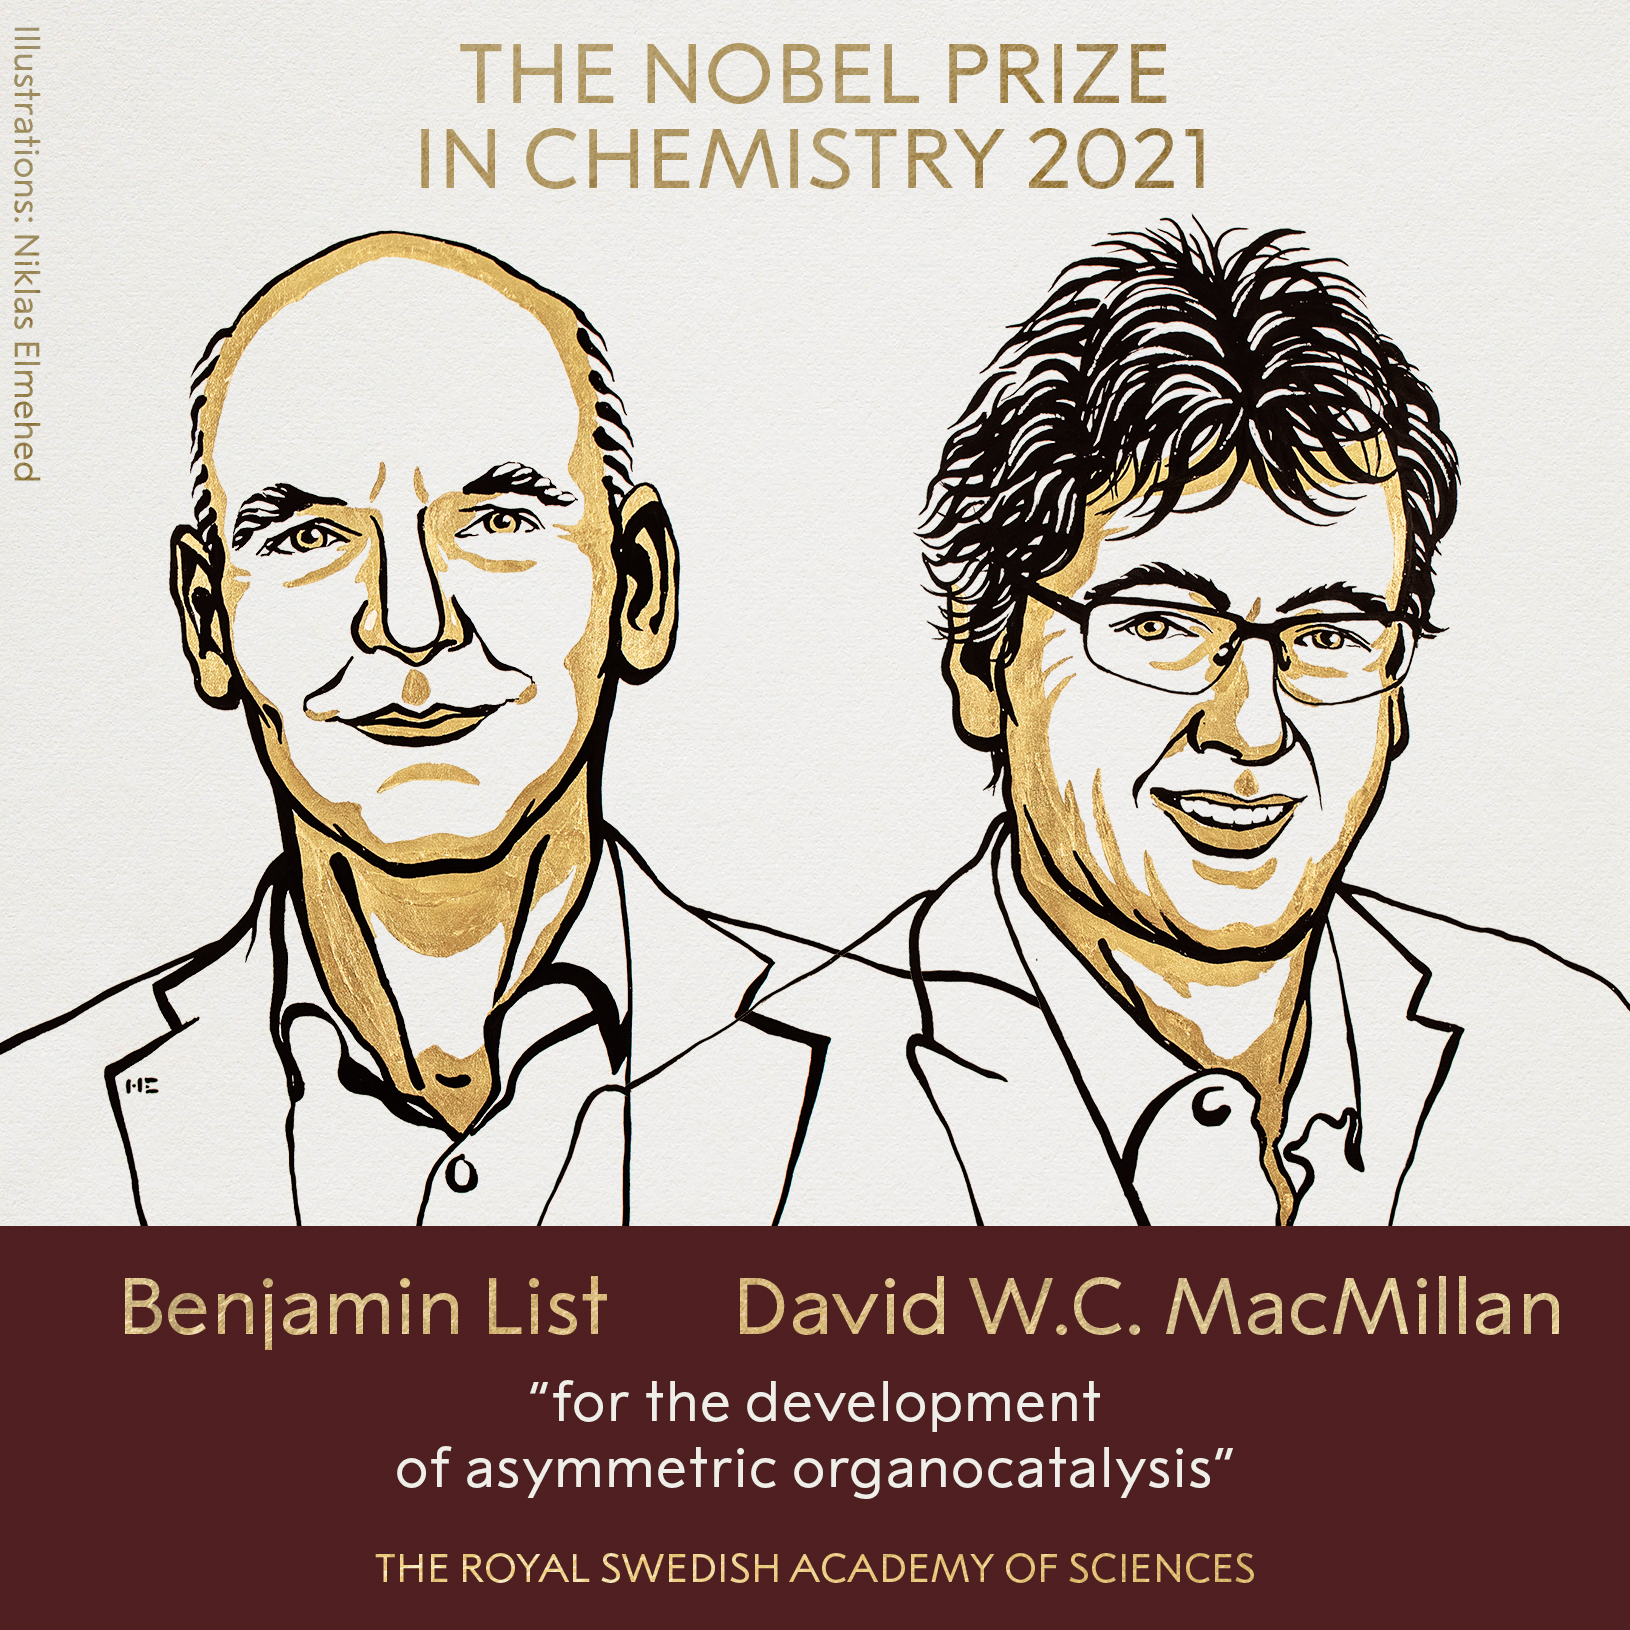 Il premio Nobel per la Chimica 2021 va a Benjamin List e David W.C. MacMillan 